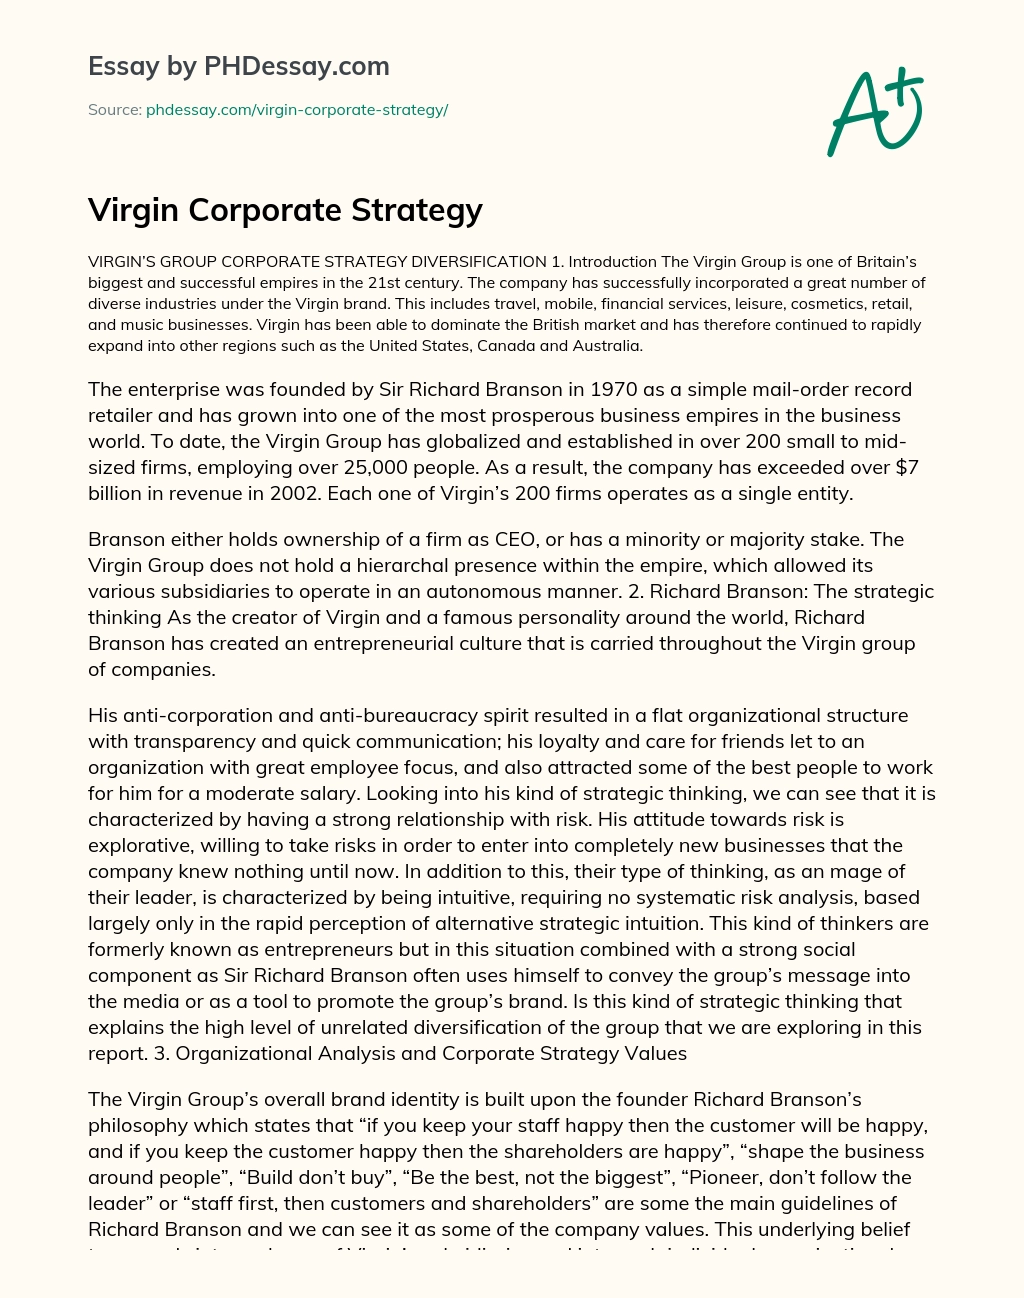 Virgin Corporate Strategy essay